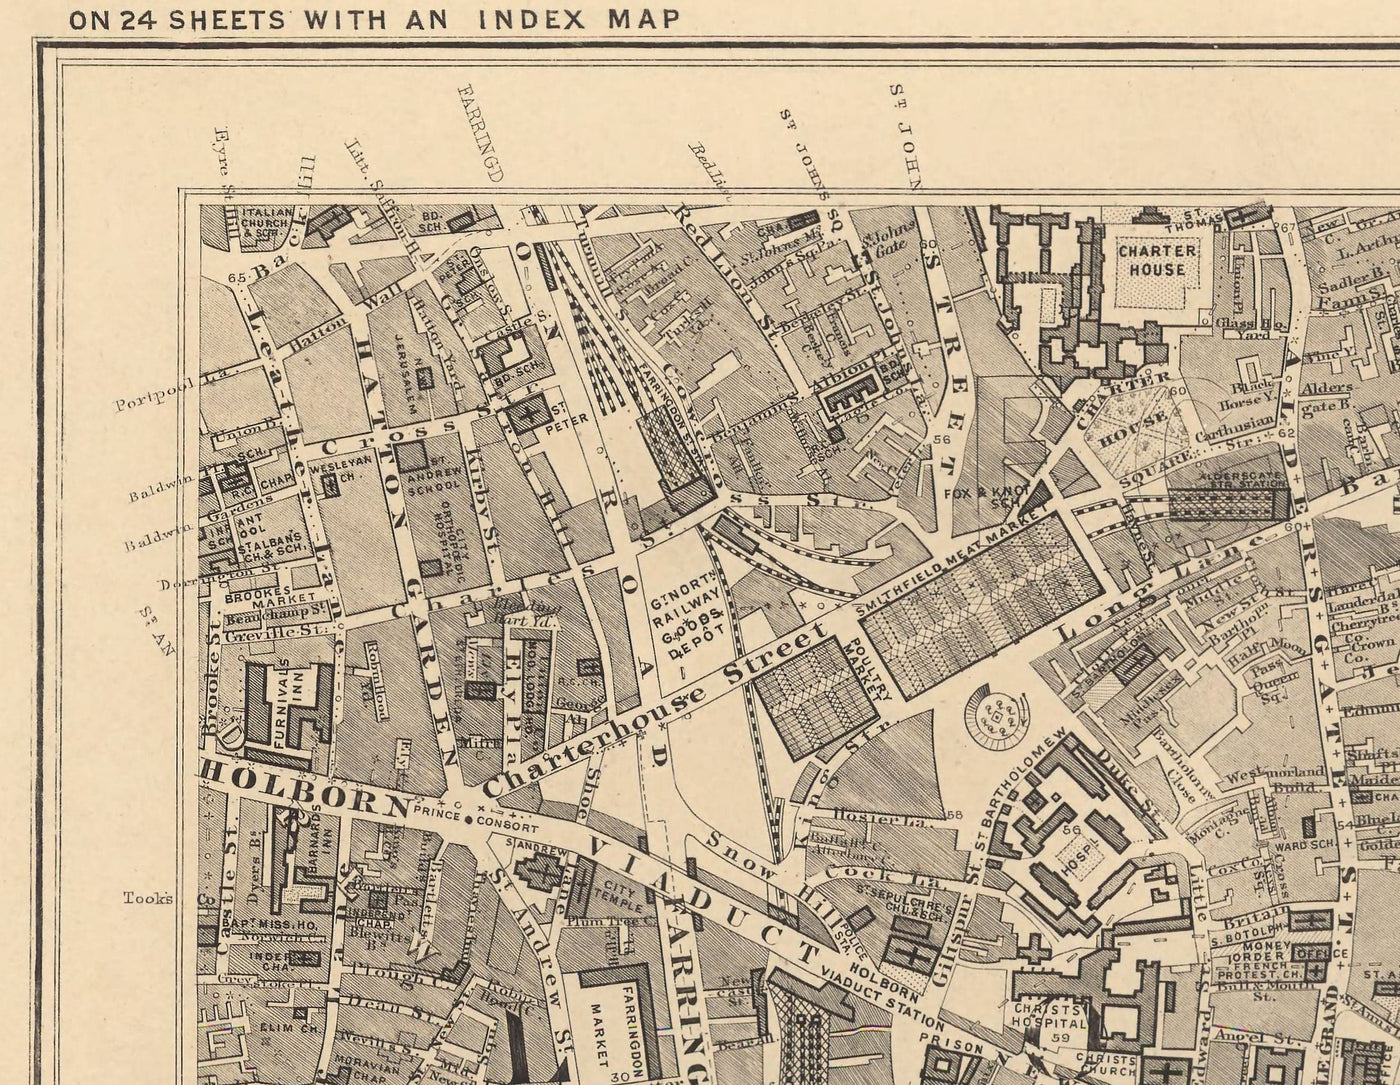 Viejo mapa de la ciudad de Londres por Edward Stanford, 1862 - London Bridge, St Pauls, Liverpool St, Bank, Finsbury, Southwark - EC1, EC2, EC3, EC4, E1, E1W, SE1, SE16